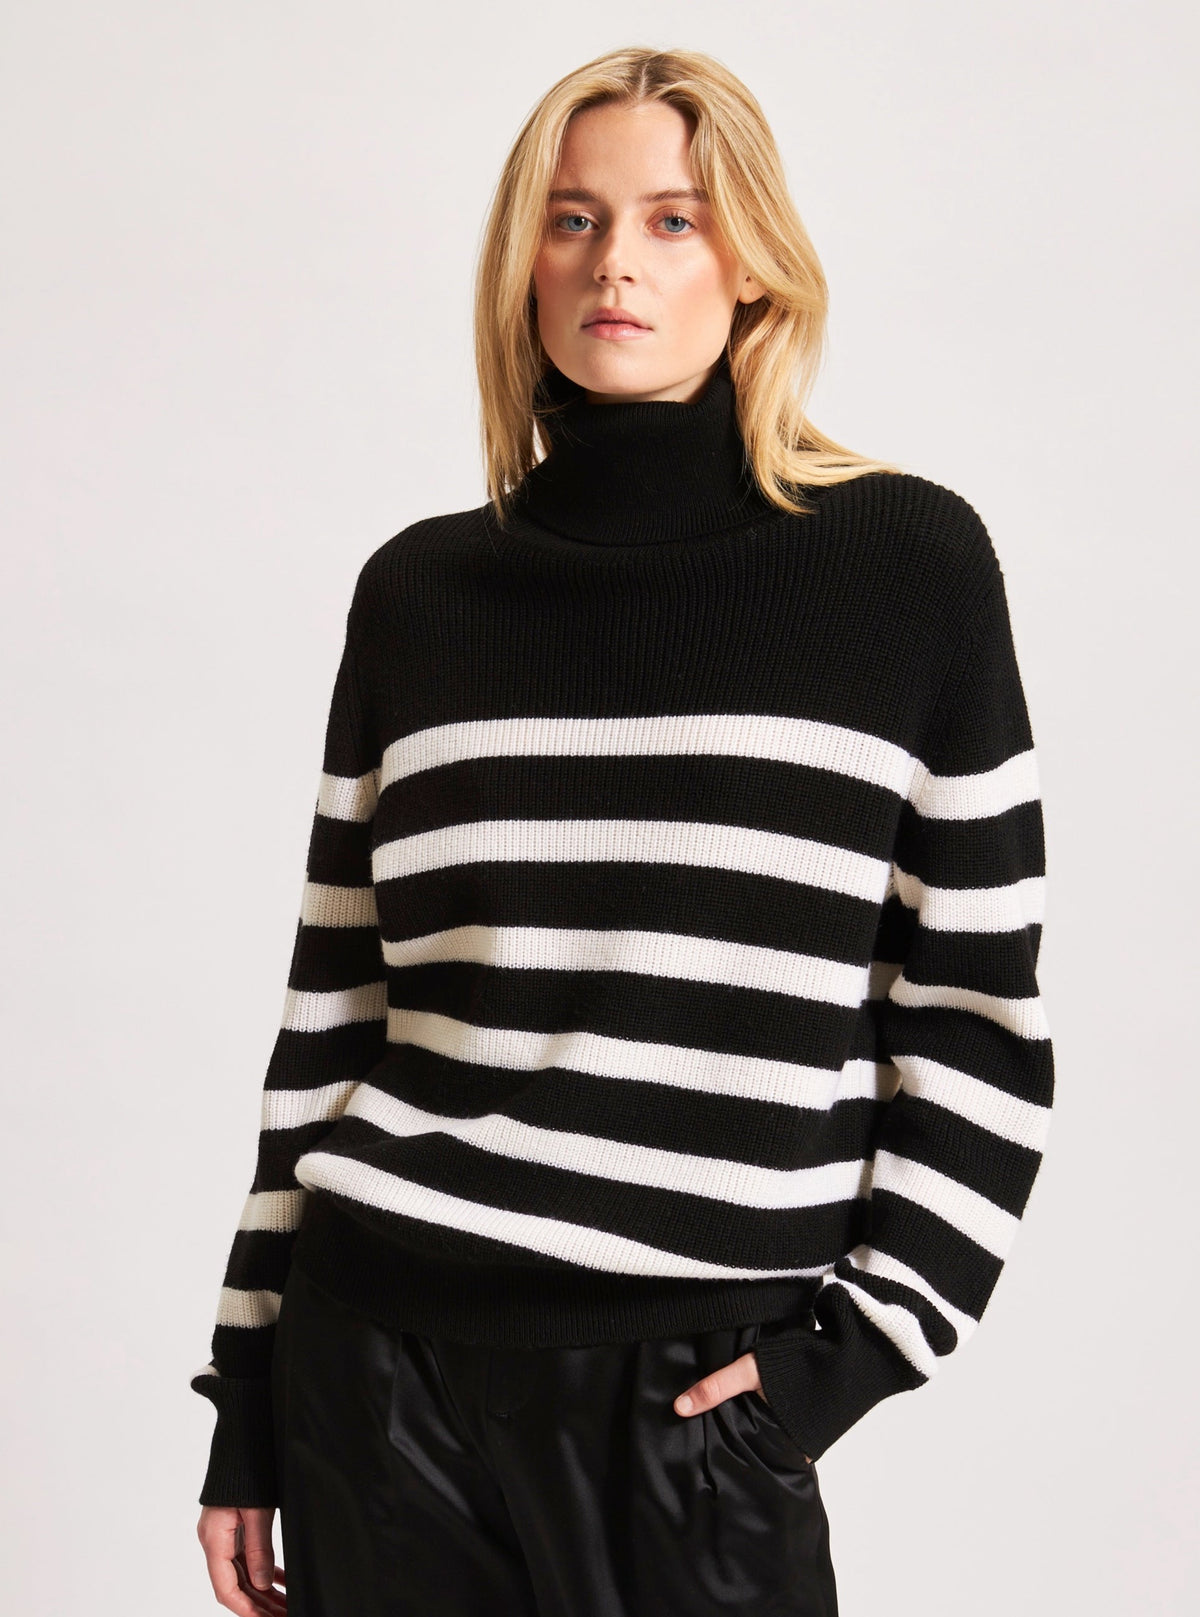 Patrick Assaraf Stripe Sweater - Size XS Available